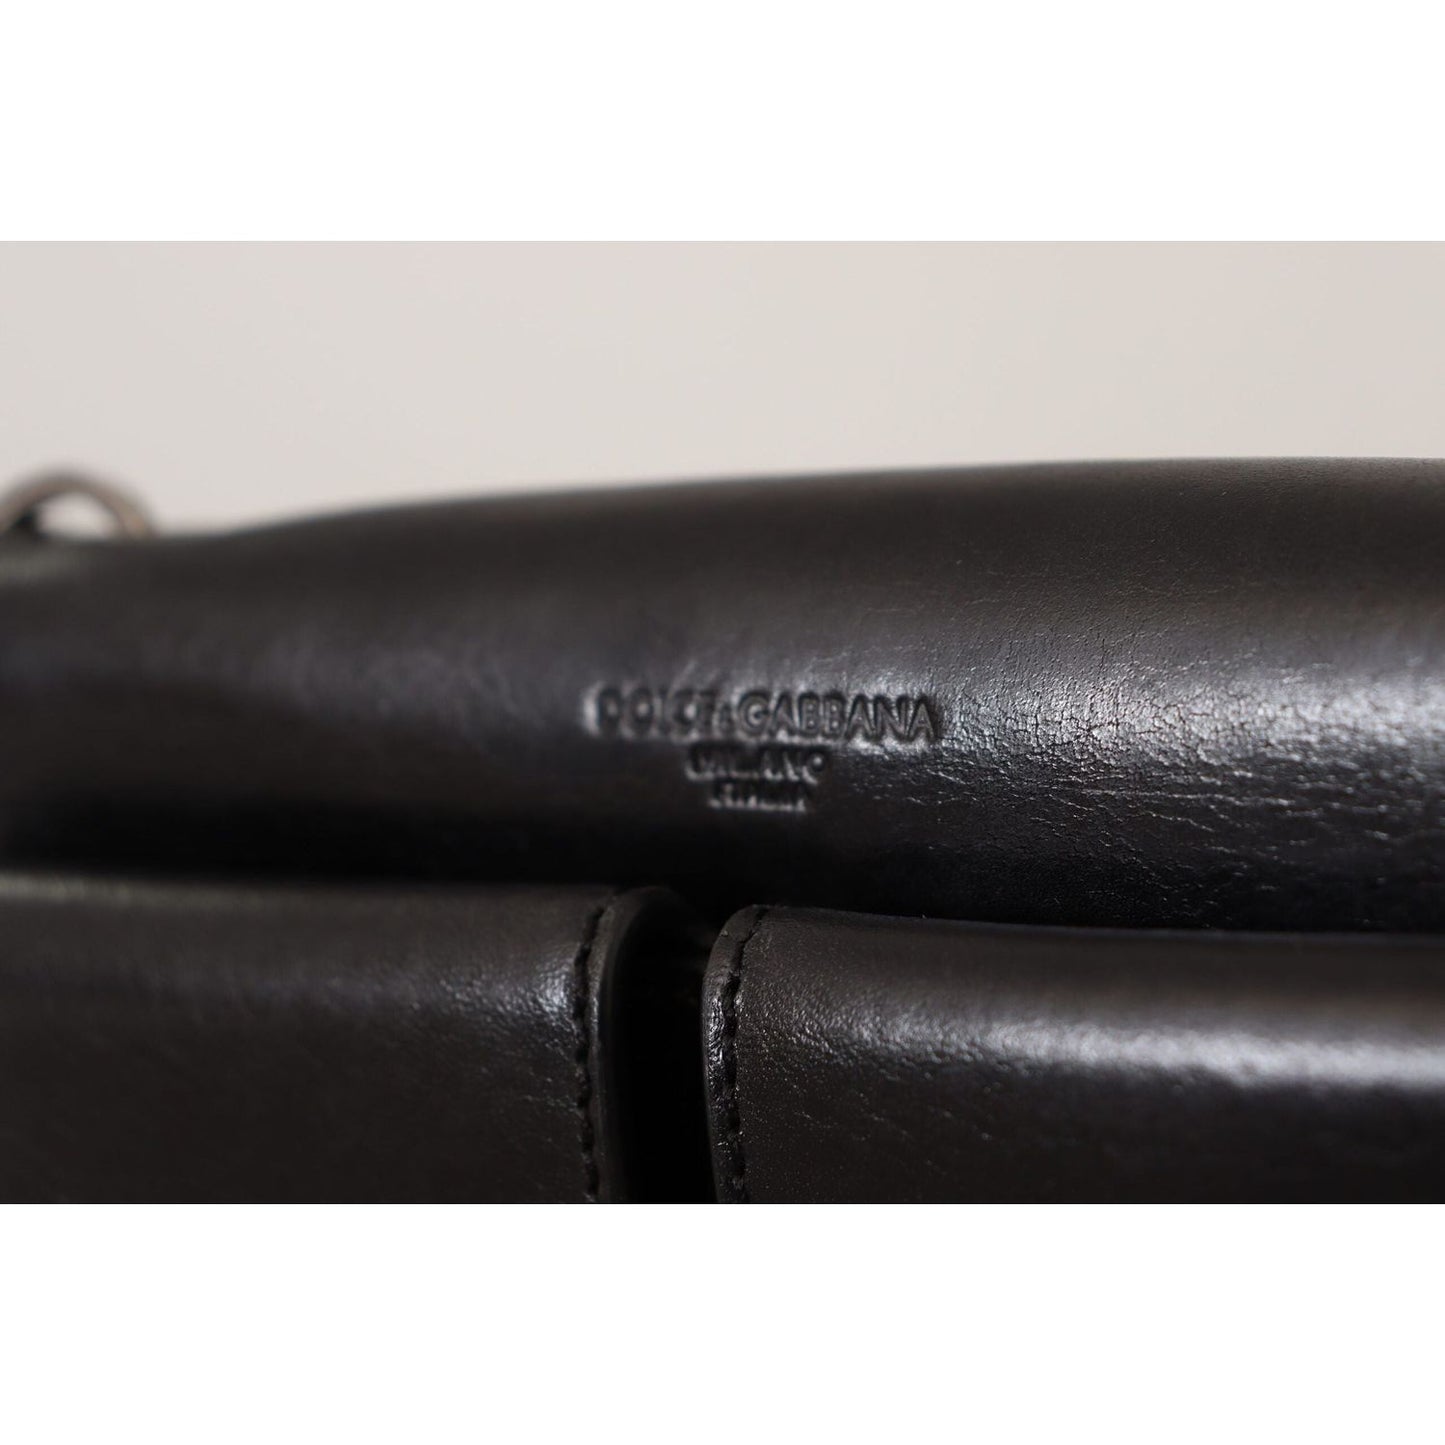 Dolce & Gabbana Elegant Mini Leather Wallet in Timeless Black black-leather-wristlet-mini-bag-card-bill-wallet